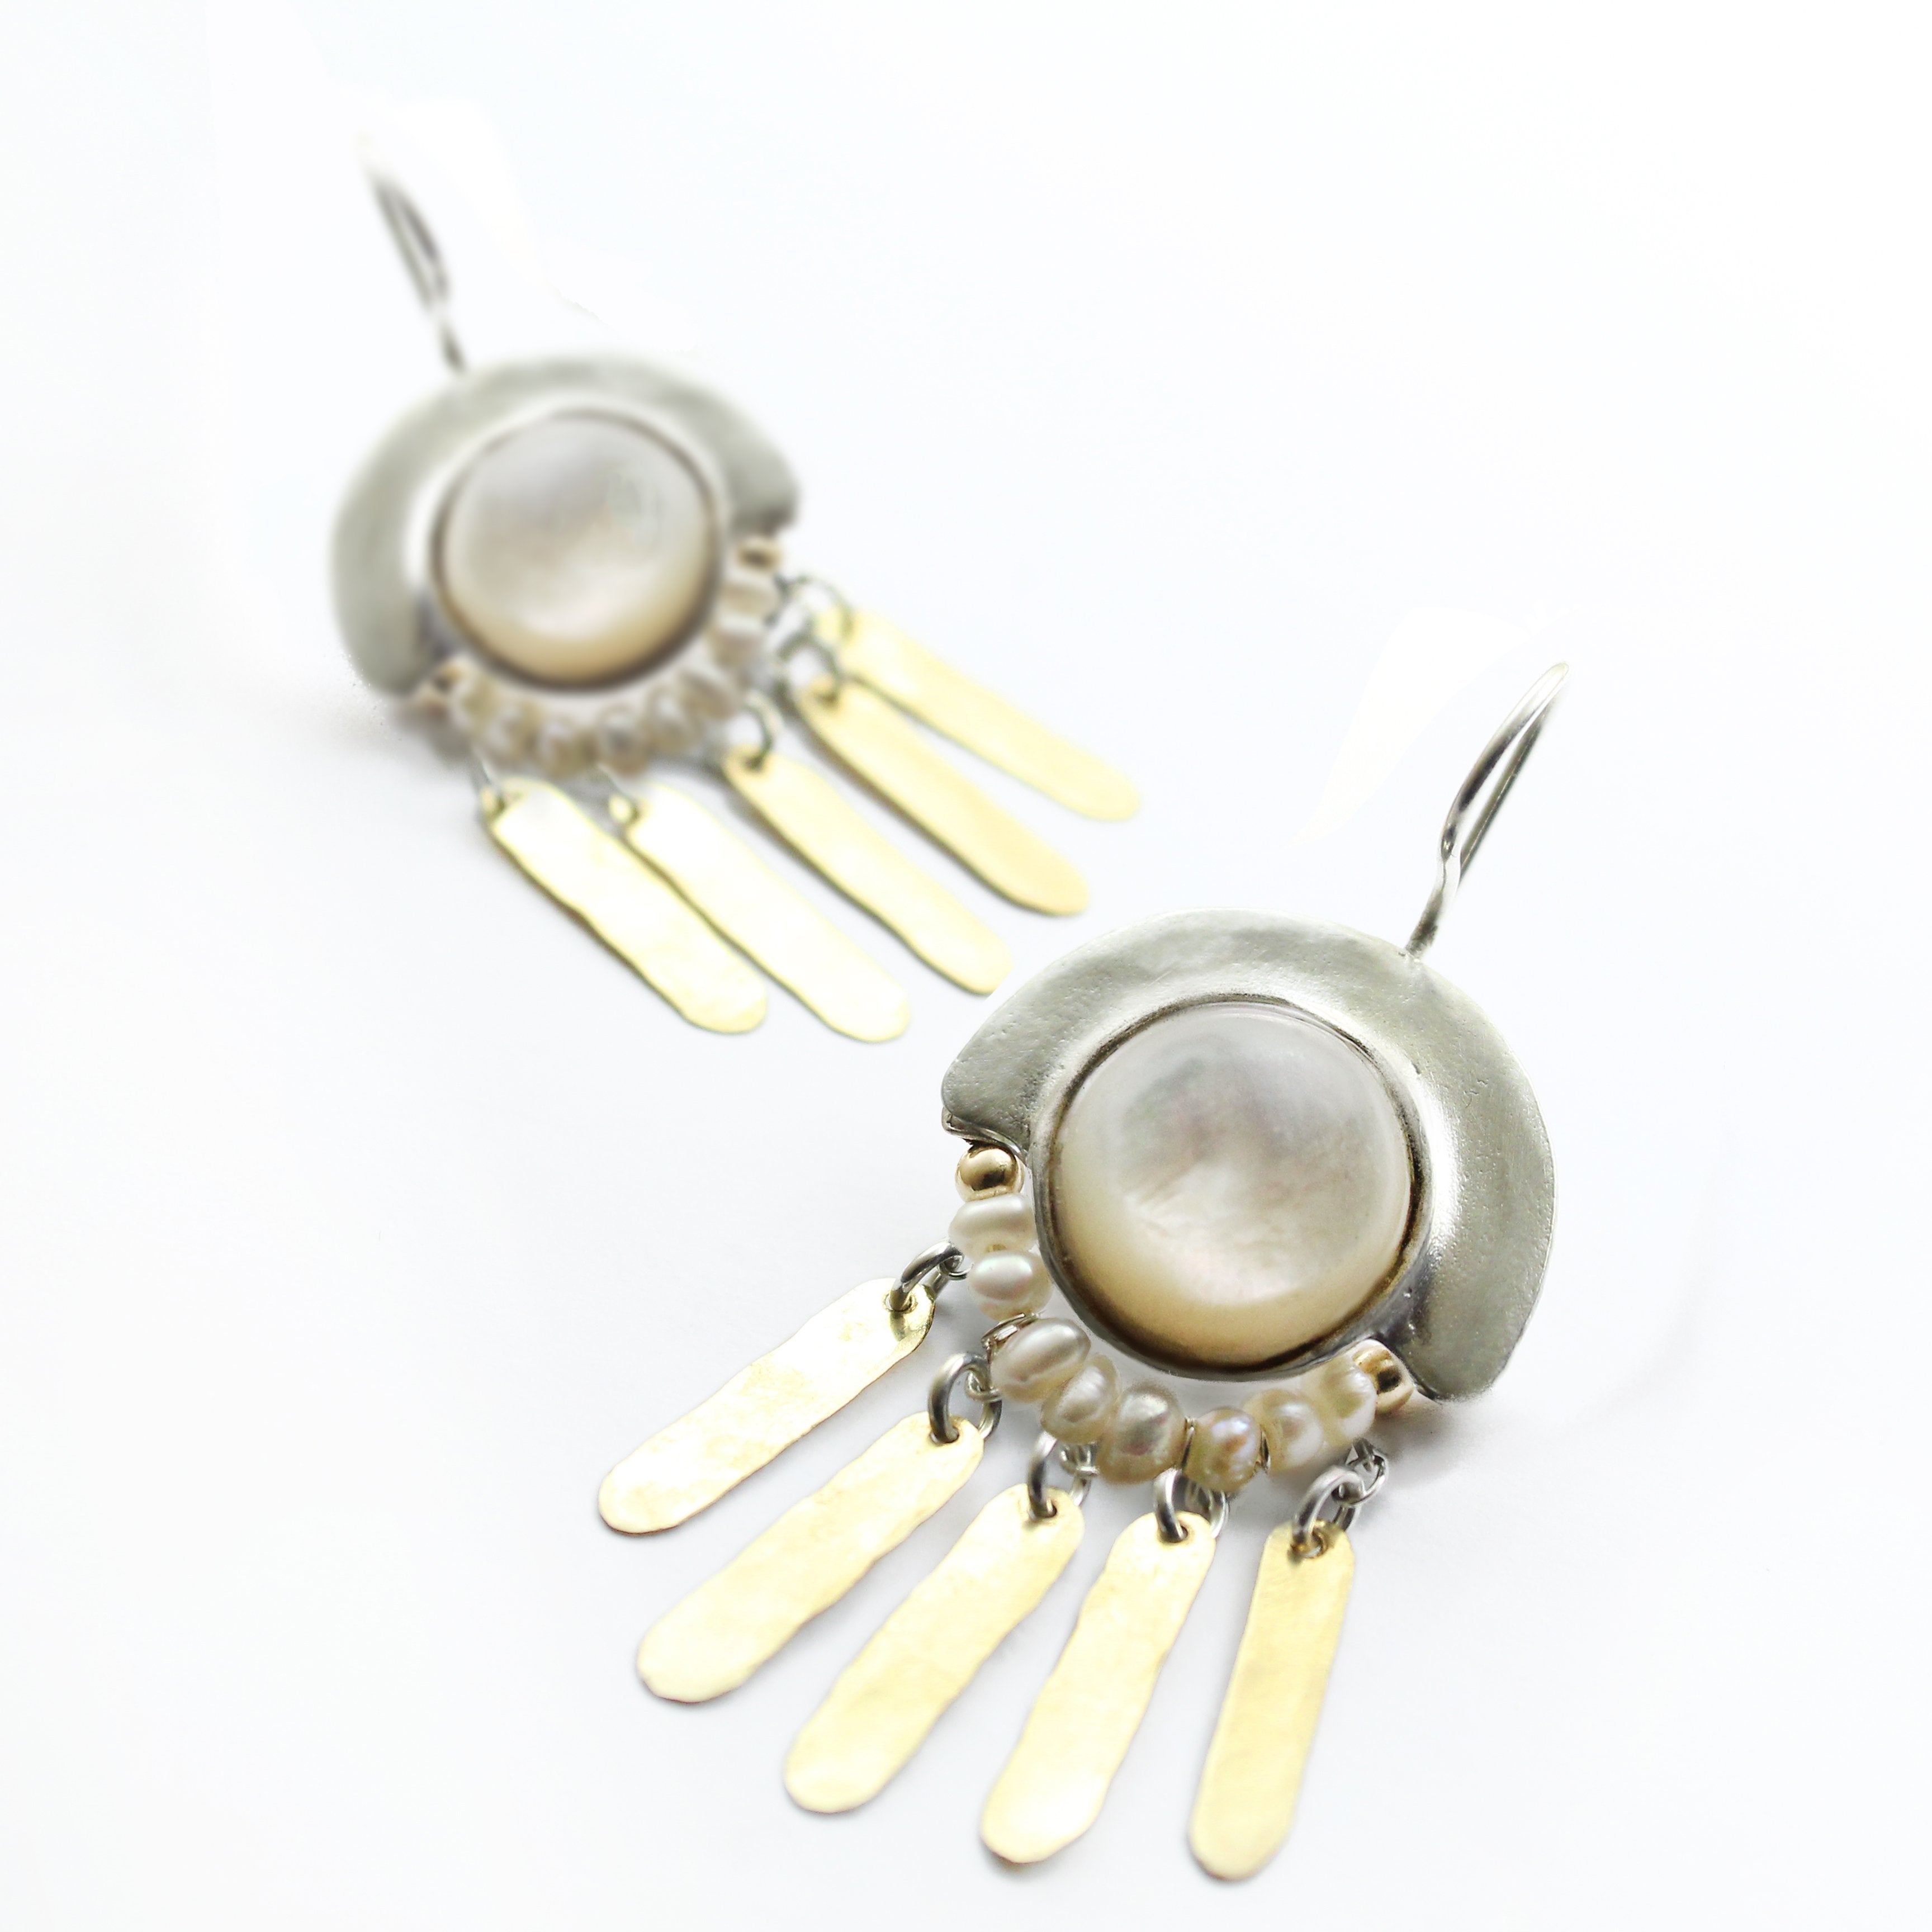 Elegant Bohemian Style Silver, Gold filled & Pearls Large Earrings - Shulamit Kanter